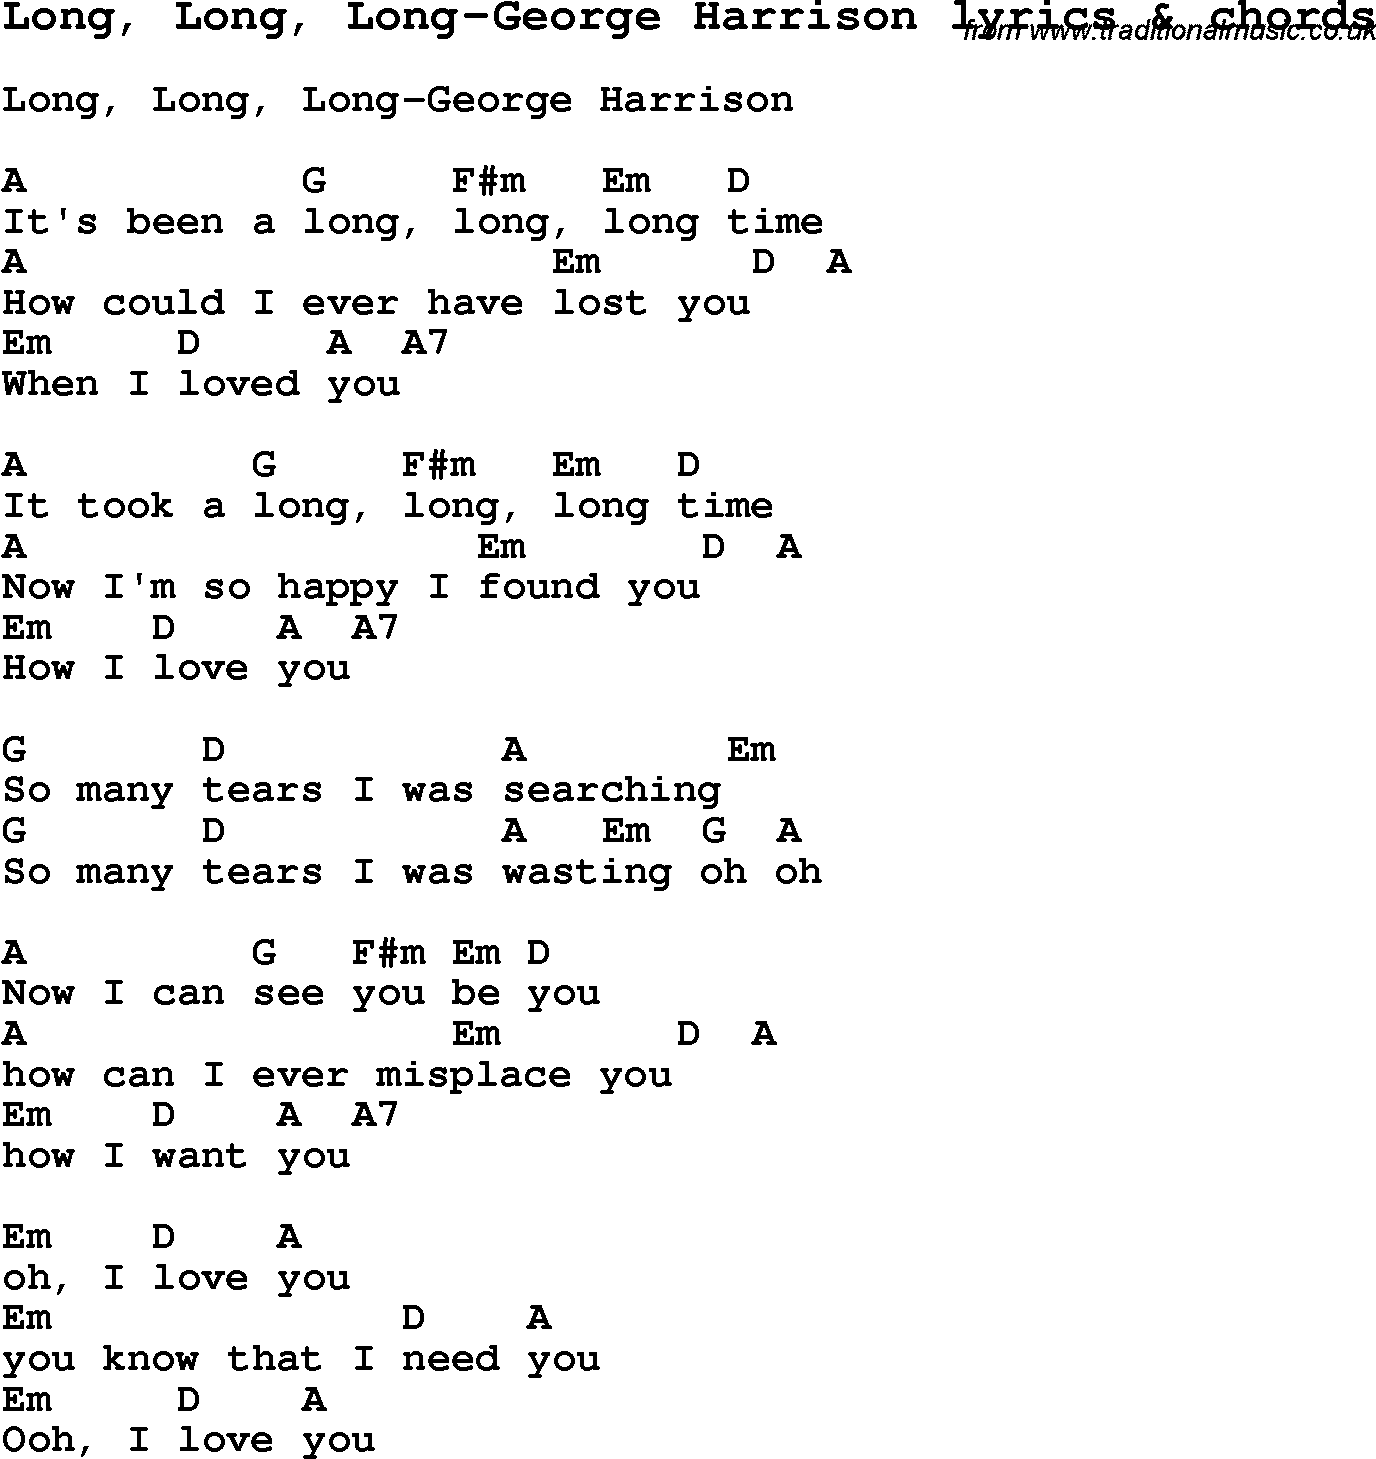 Love Song Lyrics for: Long, Long, Long-George Harrison with chords for Ukulele, Guitar Banjo etc.